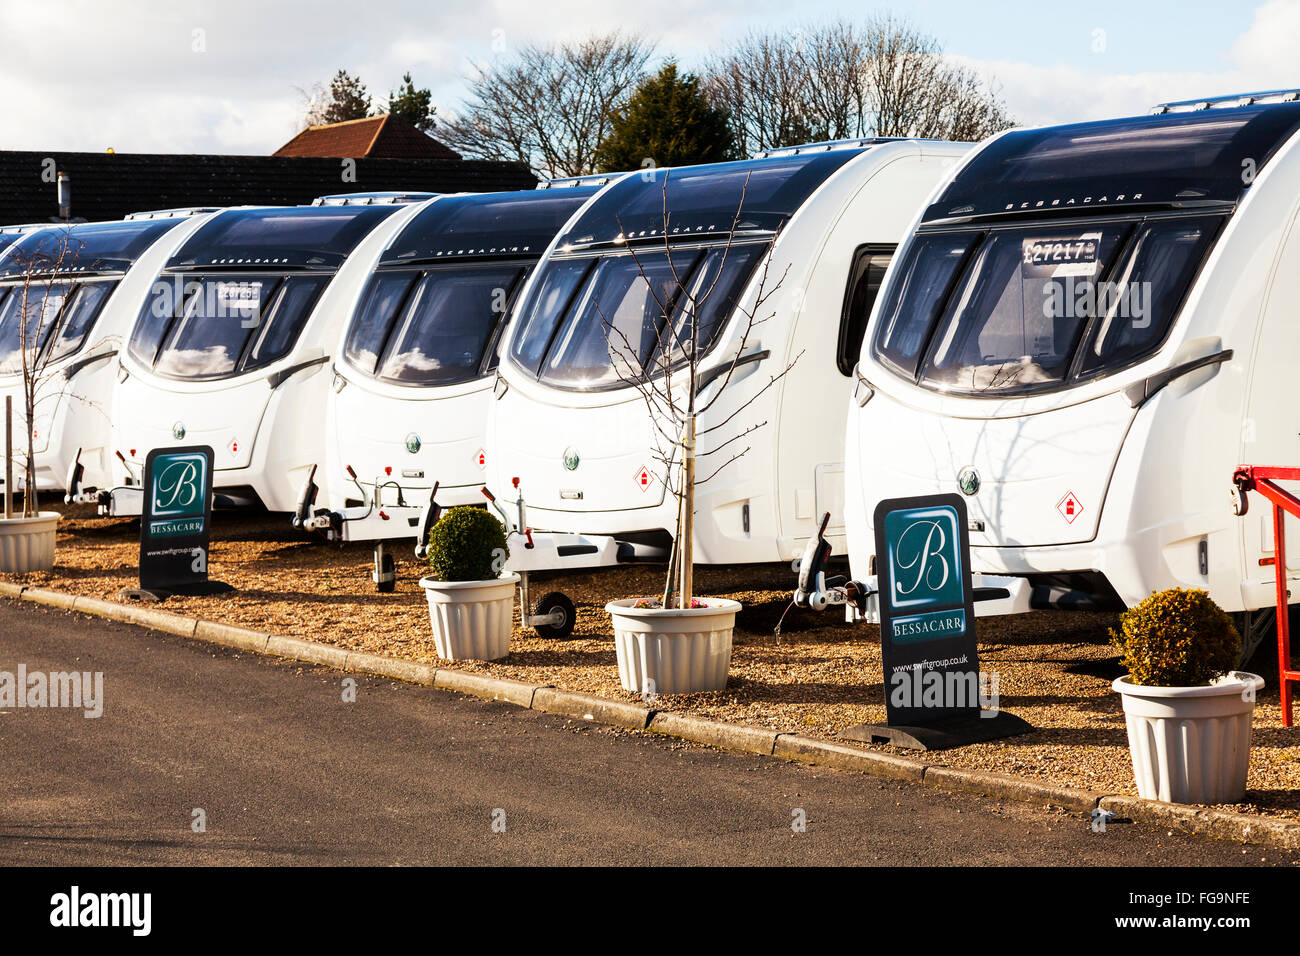 Bessacarr caravan Caravans new for sale forecourt  UK England GB Stock Photo